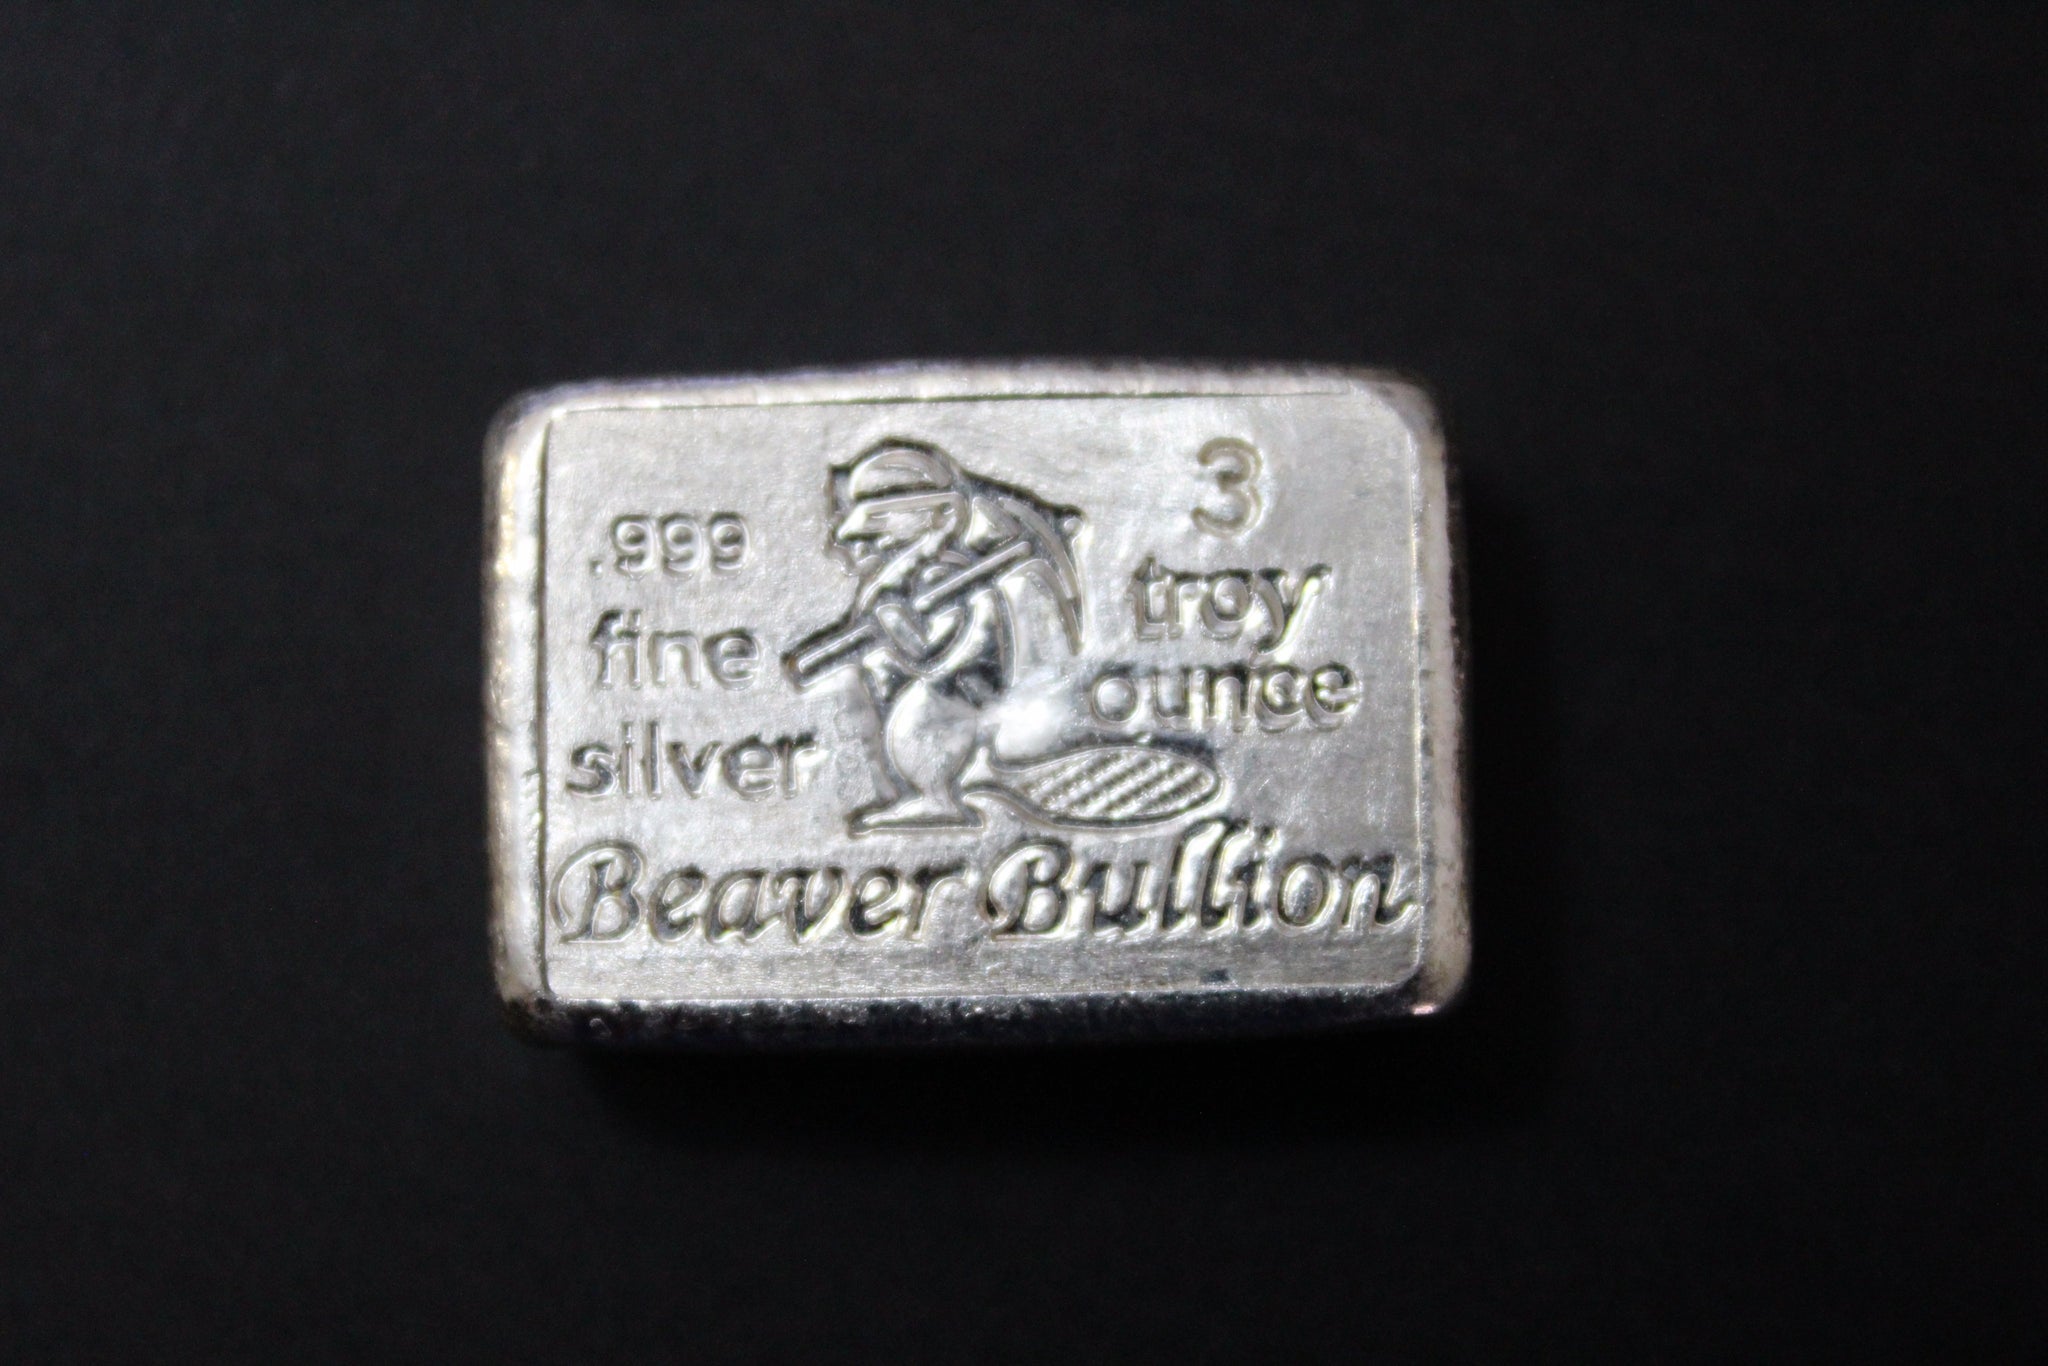 Beaver Bullion Hand Poured 3 oz .999 Pure Silver Bar